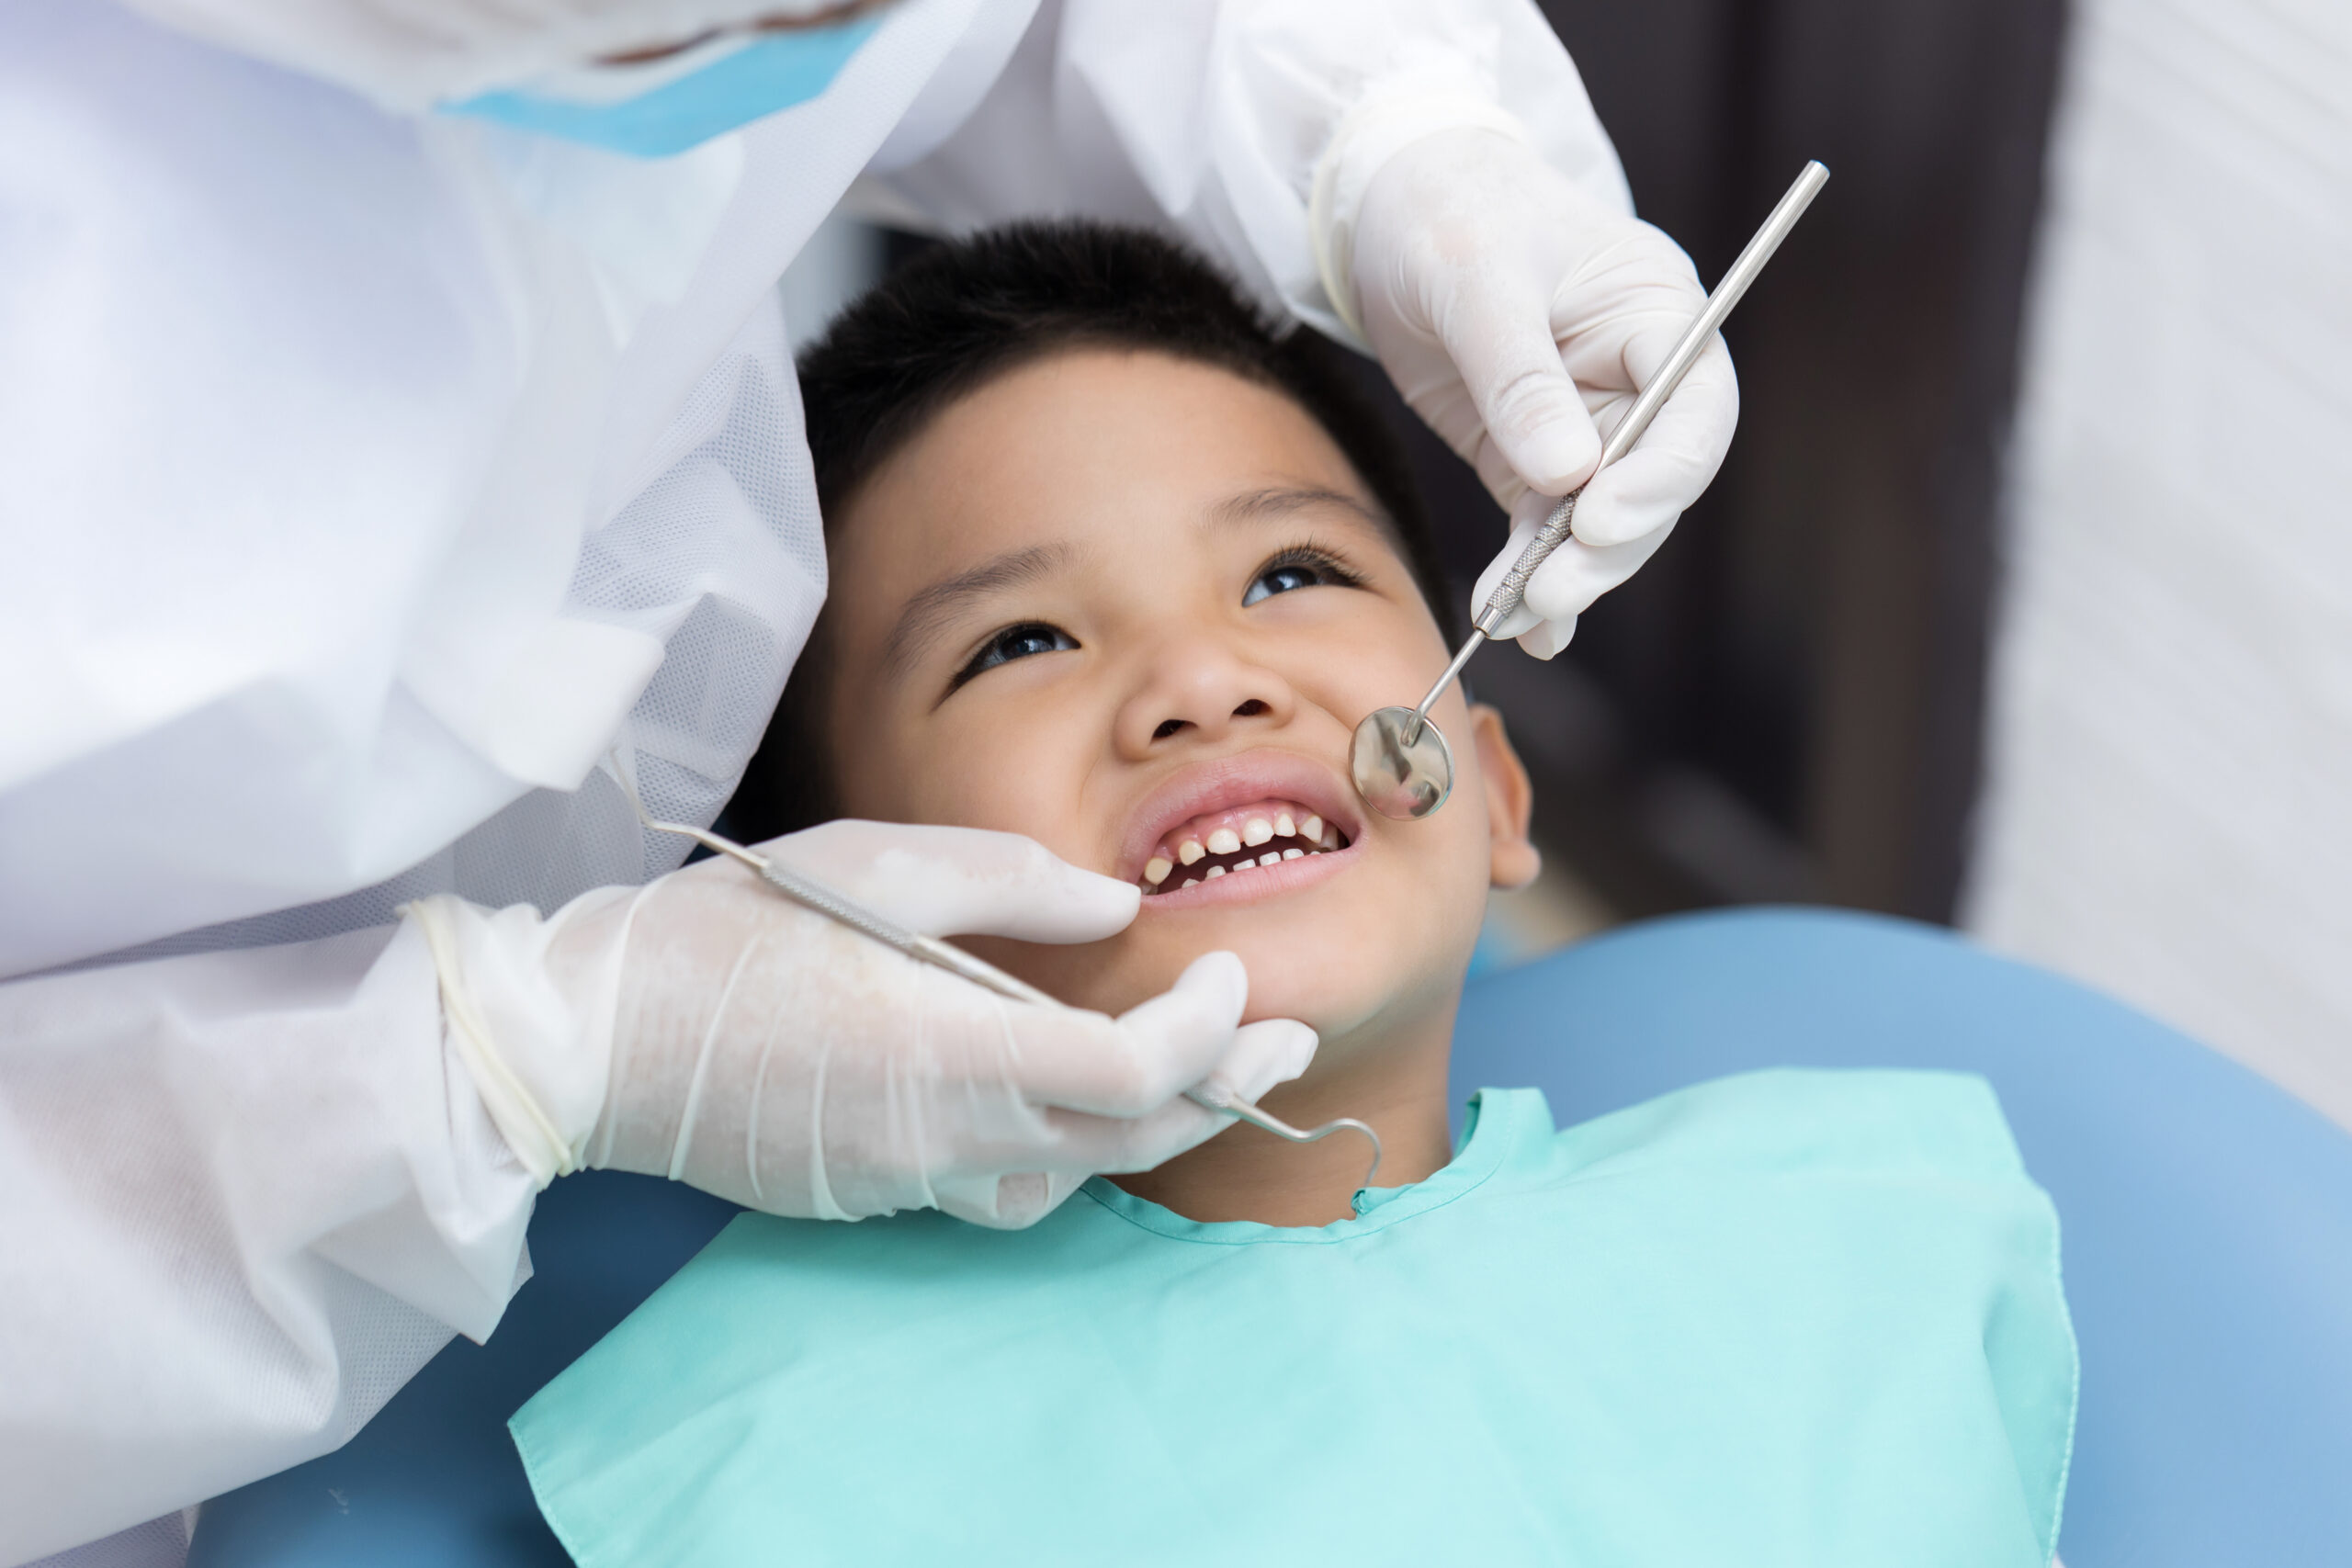 Dedicated Dental child smiling receiving dental care